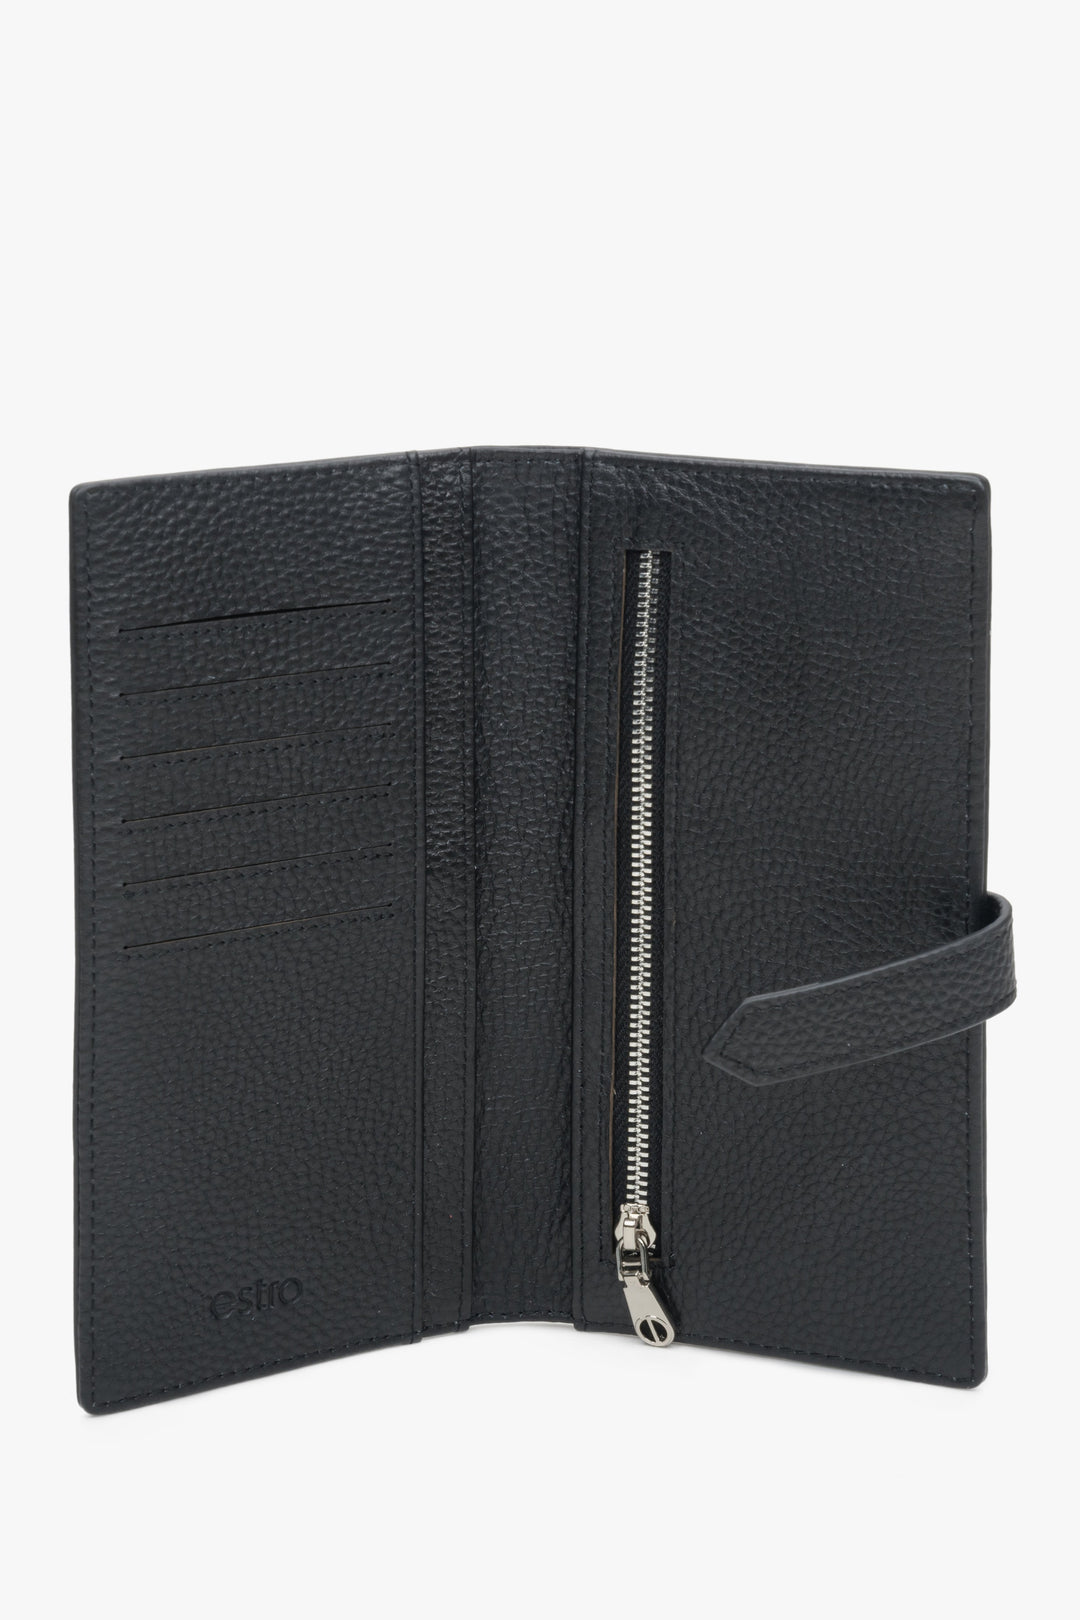 Large, black leather women's wallet by Estro - interior model.